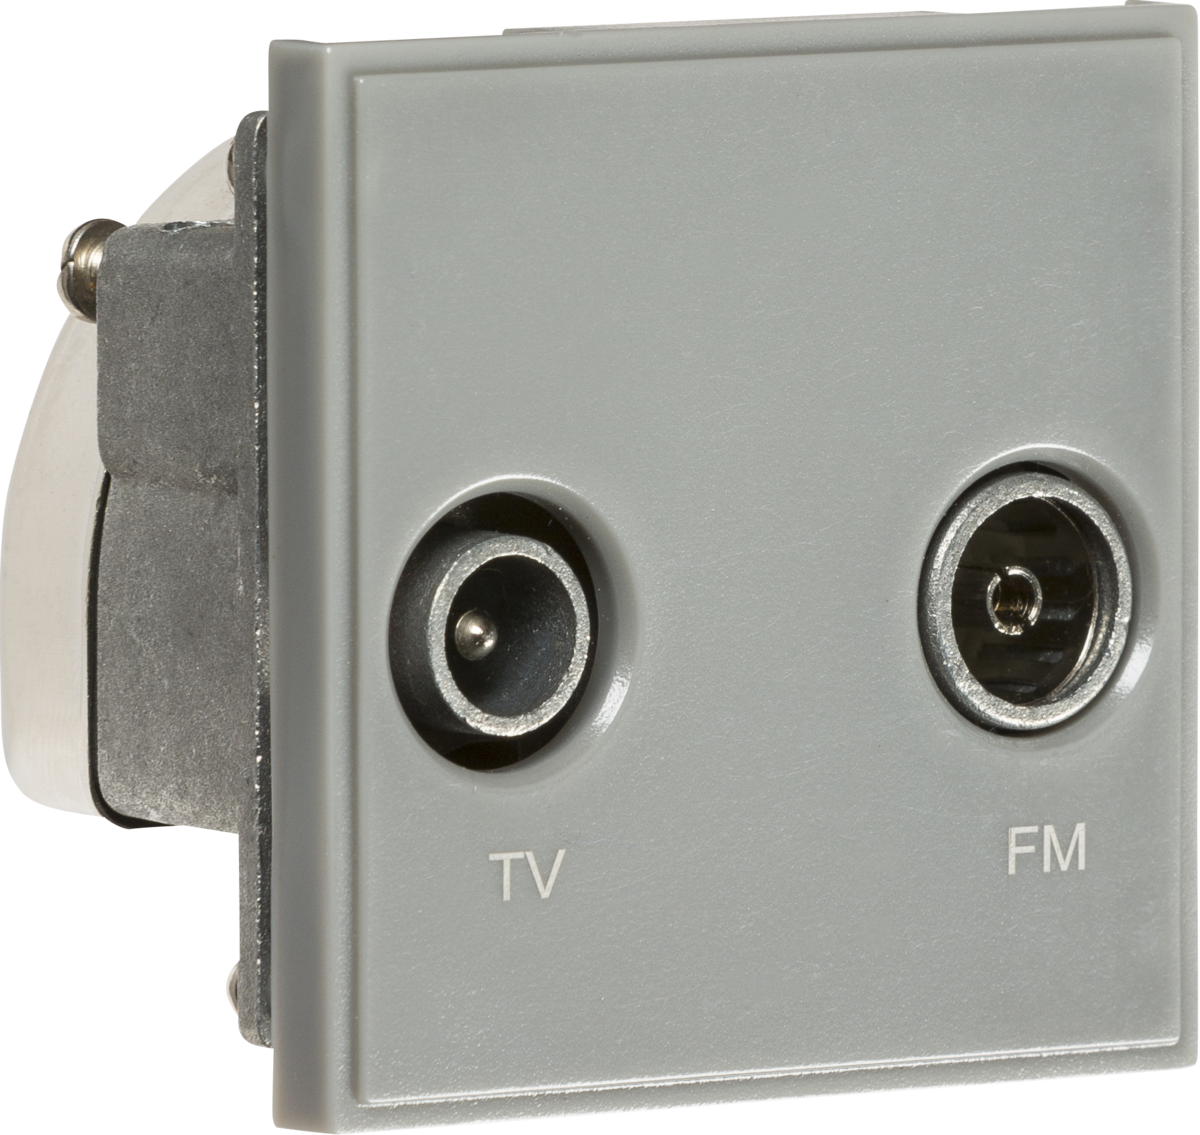 Diplexed TV /FM DAB Outlet Module 50 x 50mm - Grey